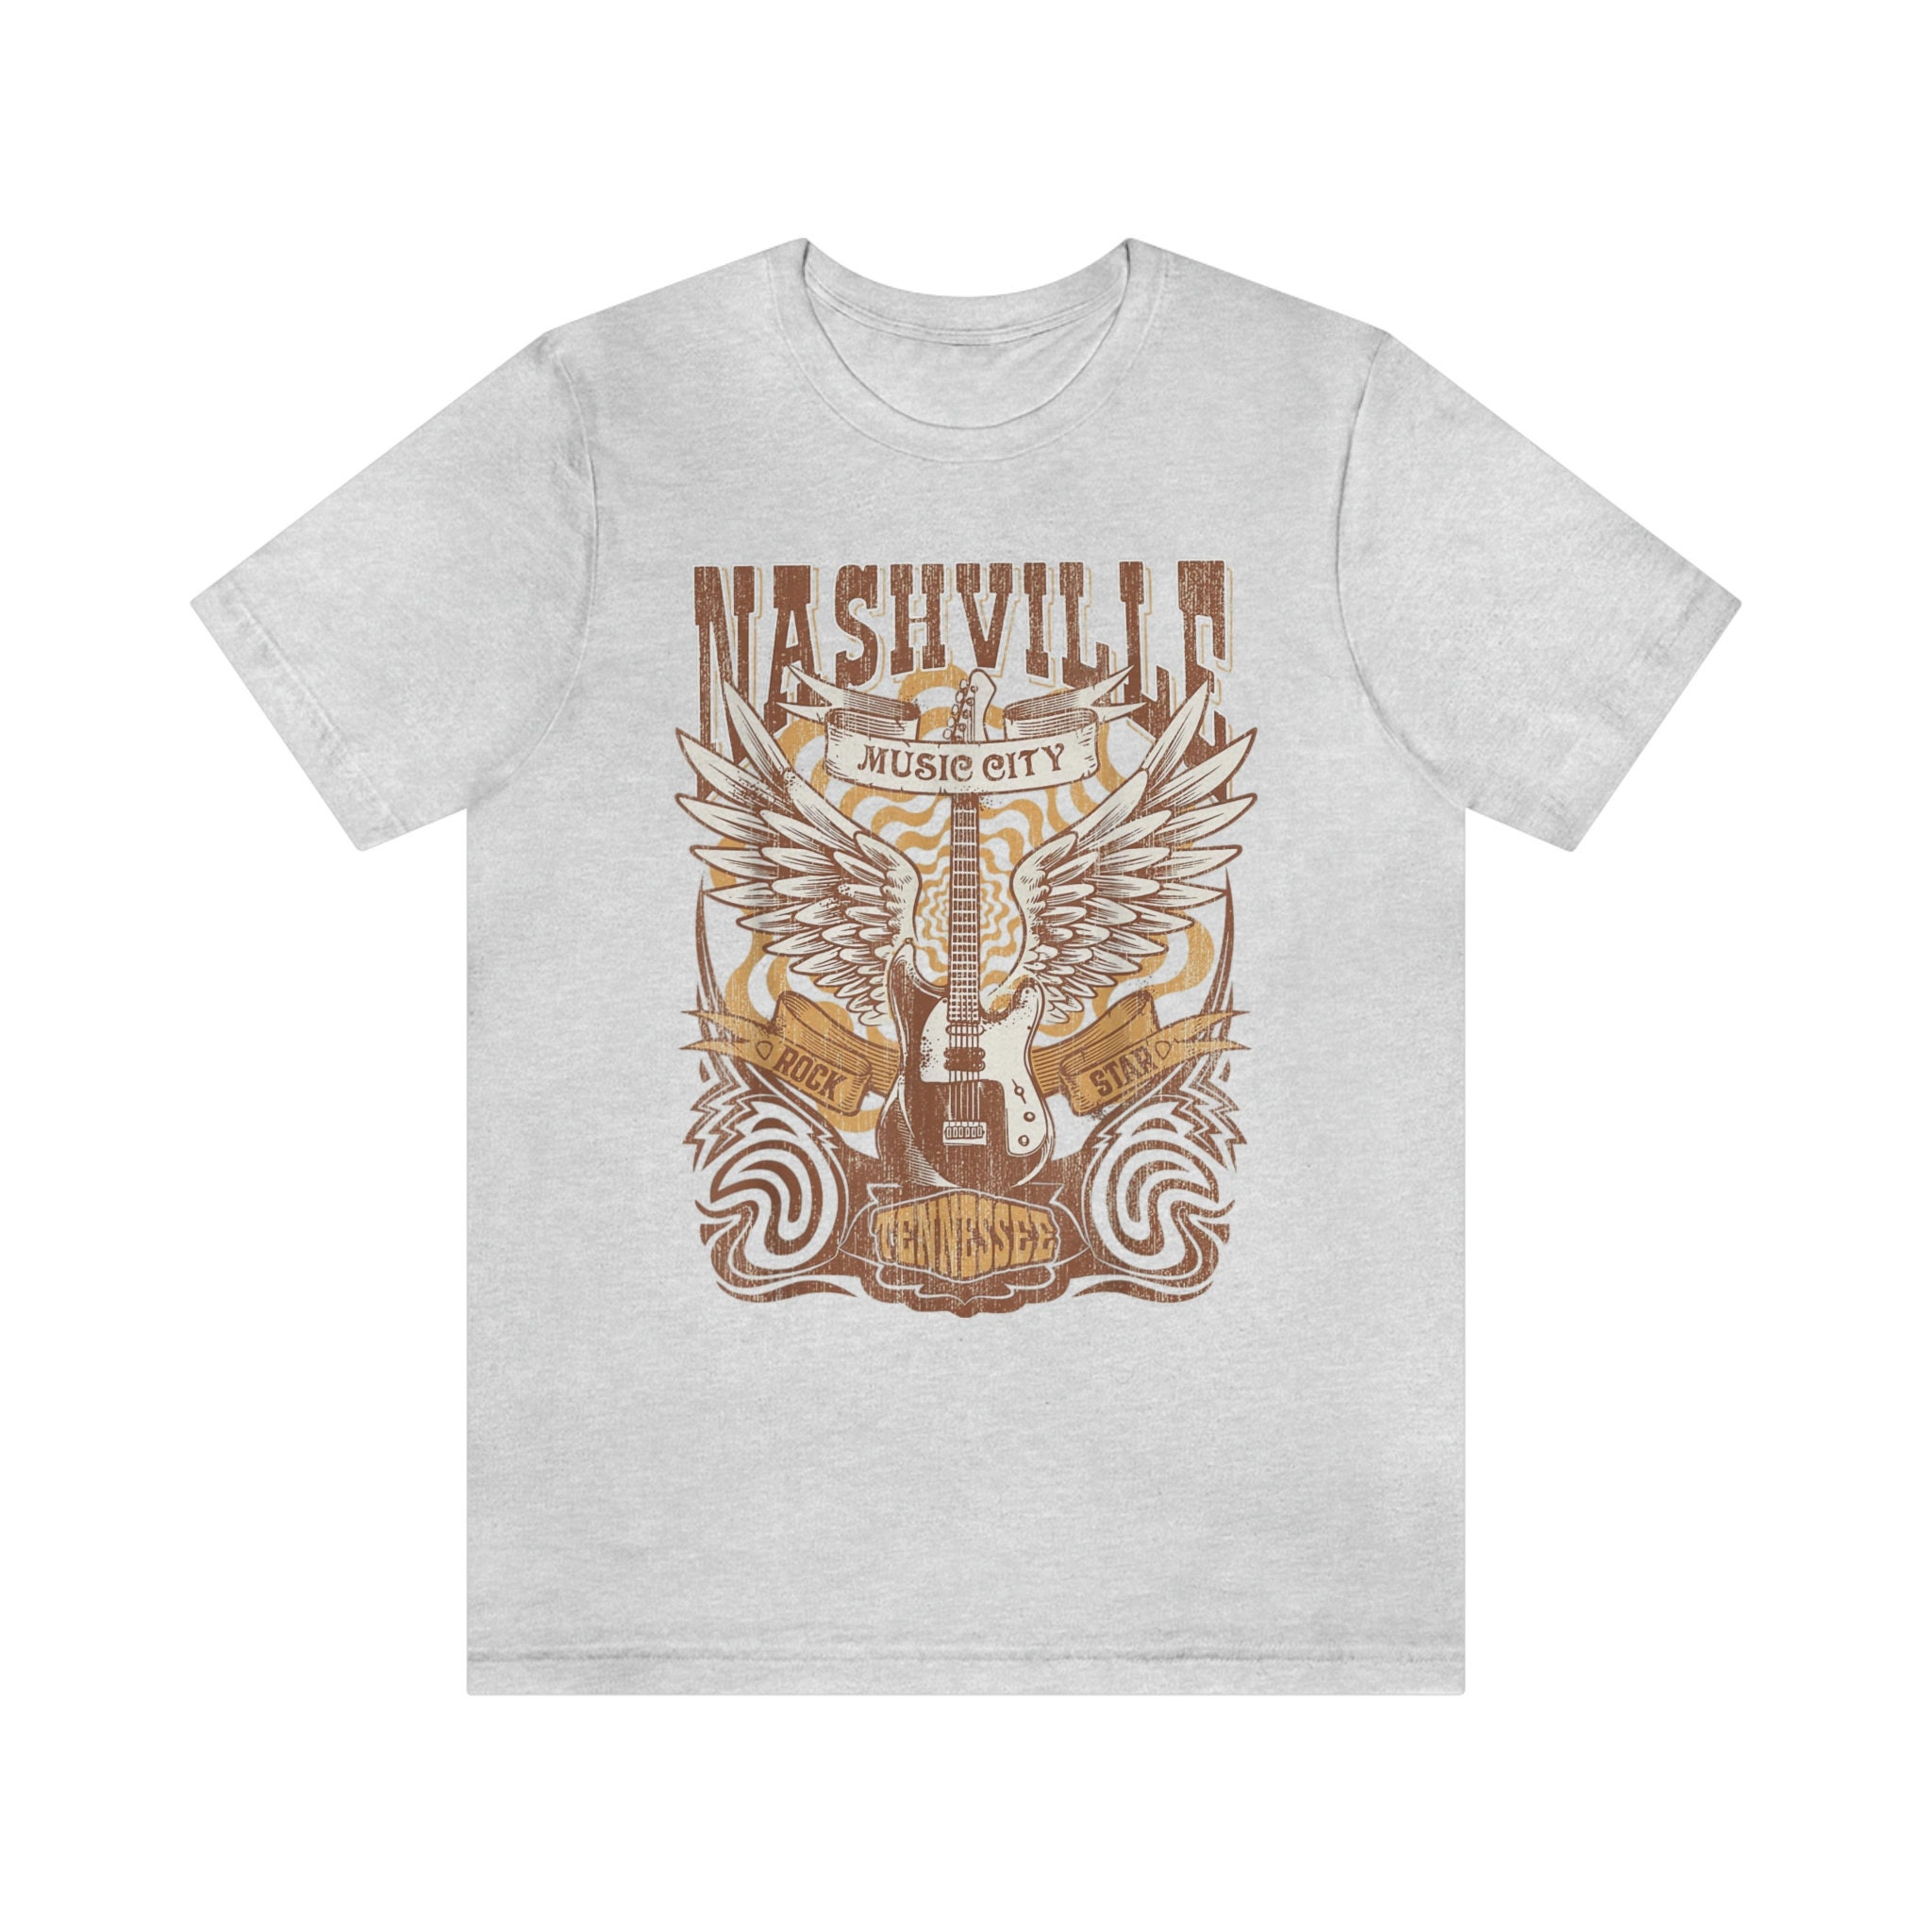 Discover Nashville Music City Tennessee Guitar Shirt, Girls Trip To Nashville T-Shirt